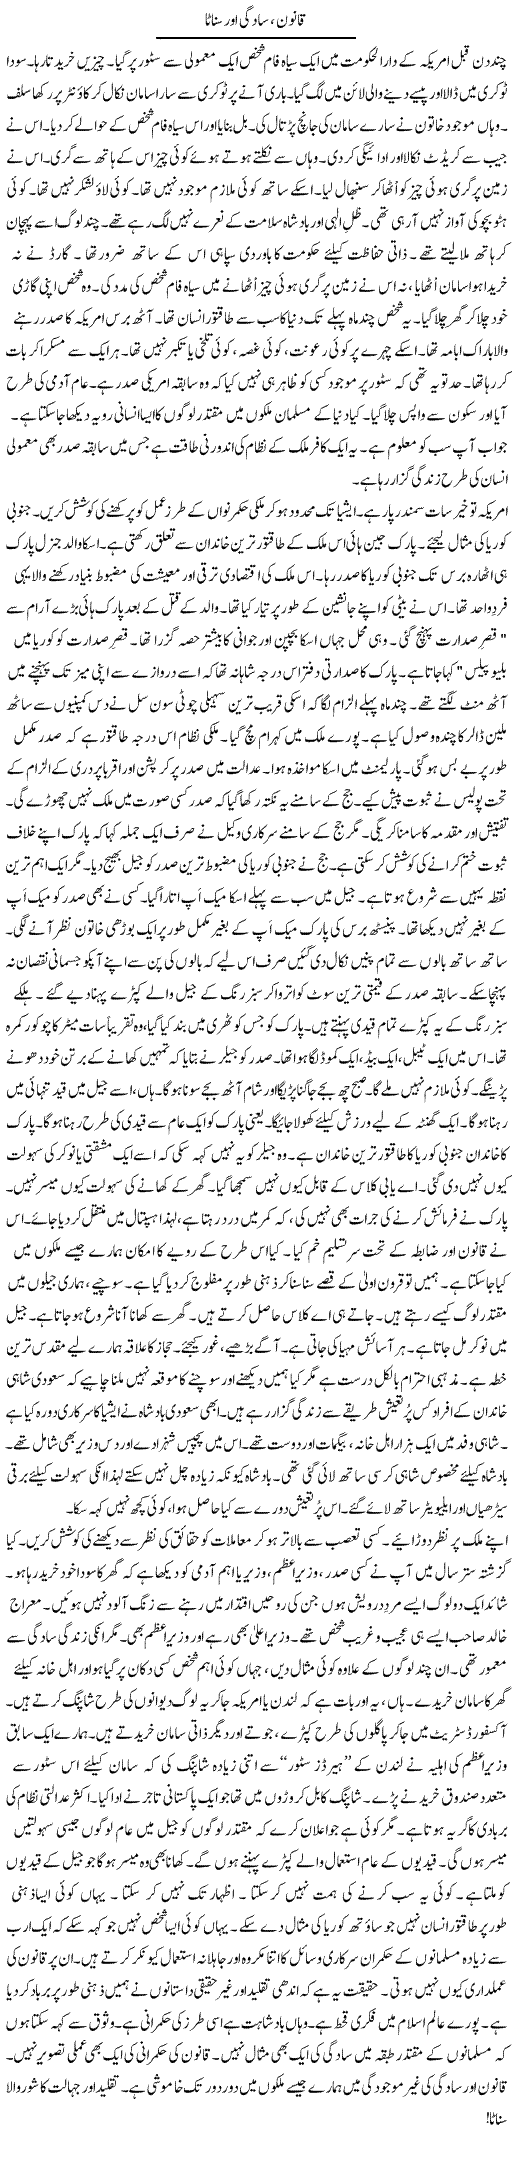 Qanoon, Saadgi Aor Sannata | Rao Manzar Hayat | Daily Urdu Columns